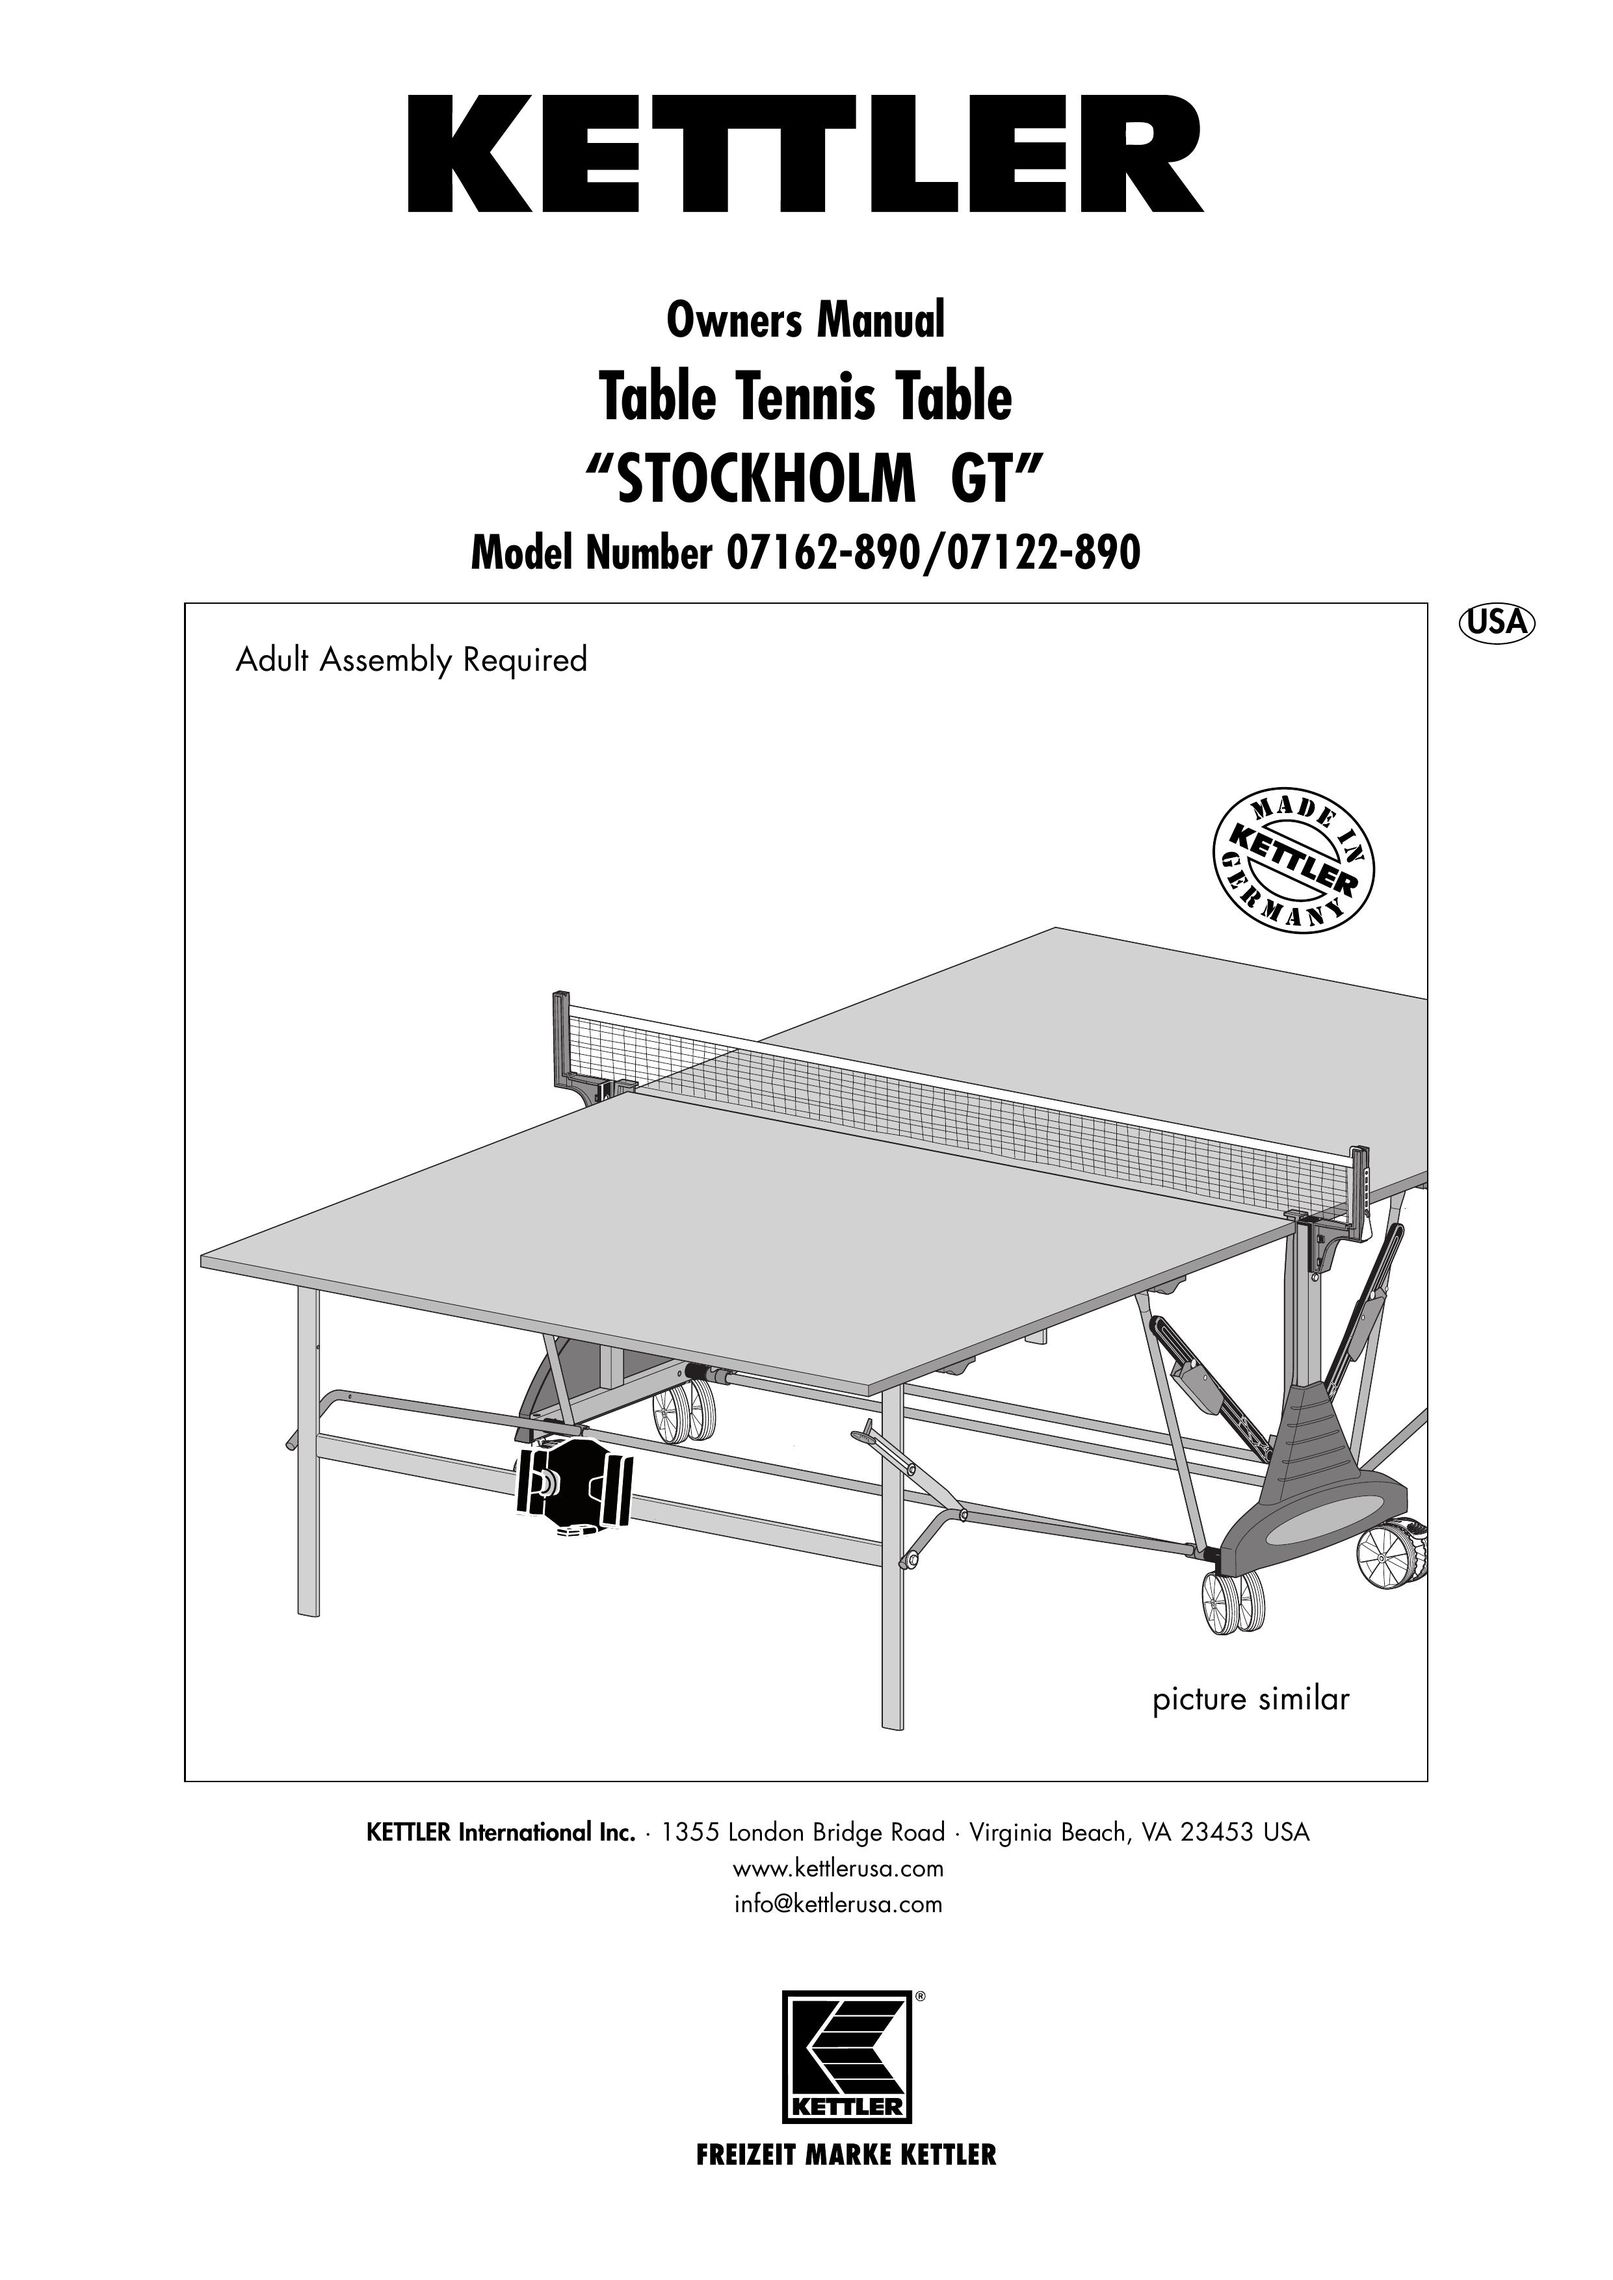 Kettler 07122-890 Table Top Game User Manual